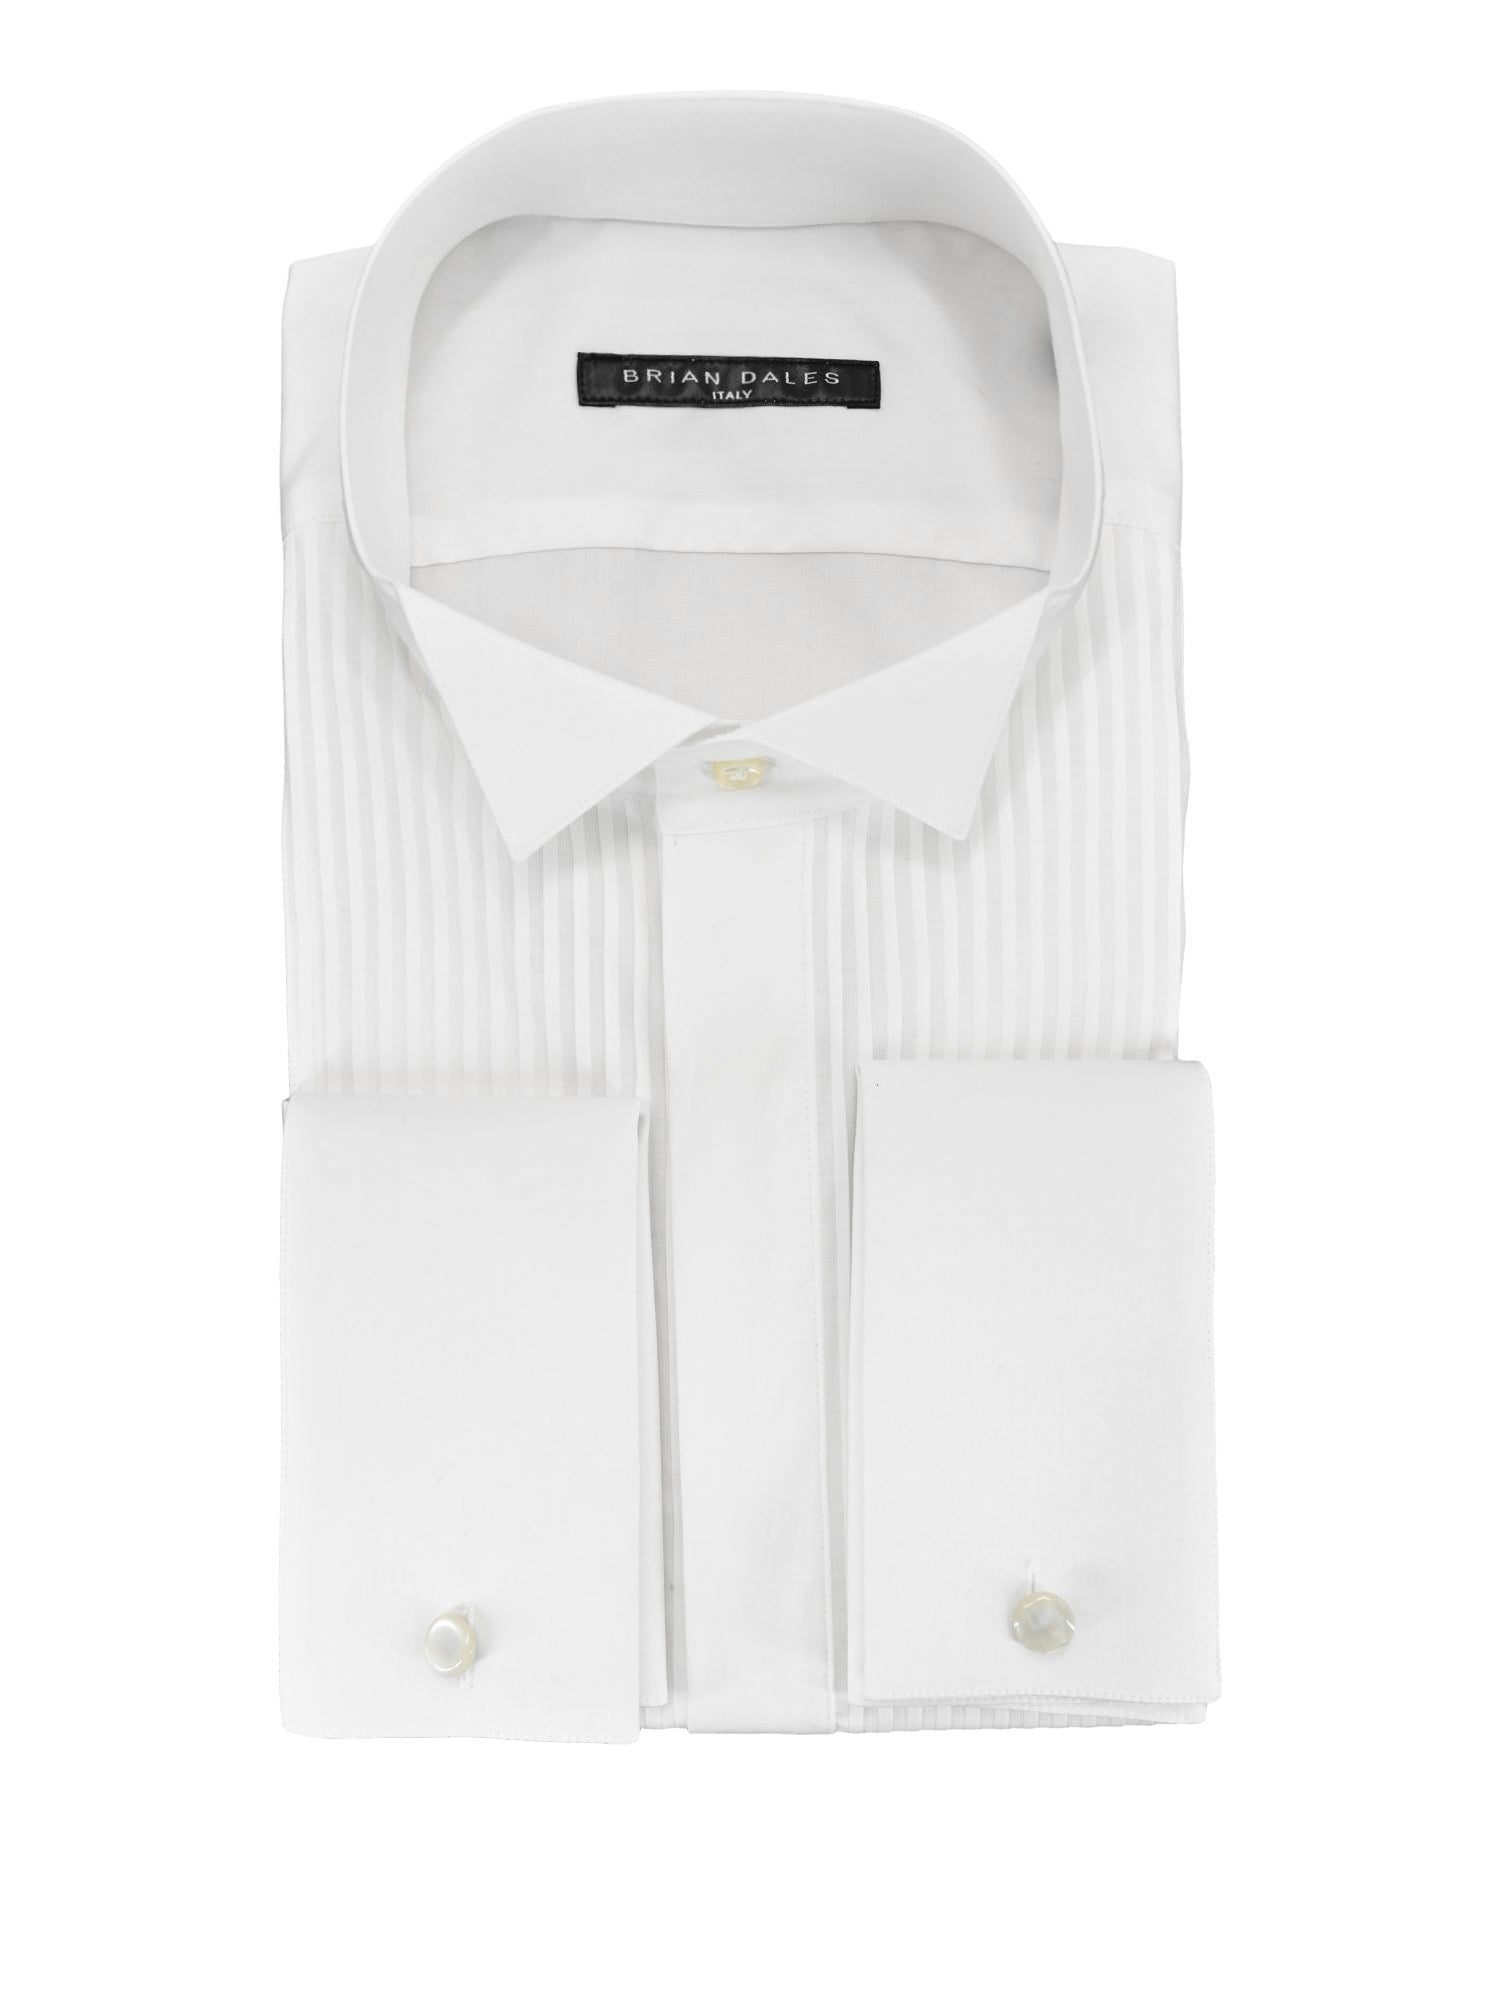 Brian Dales Men's White Double Cuff Tuxedo Shirt-1